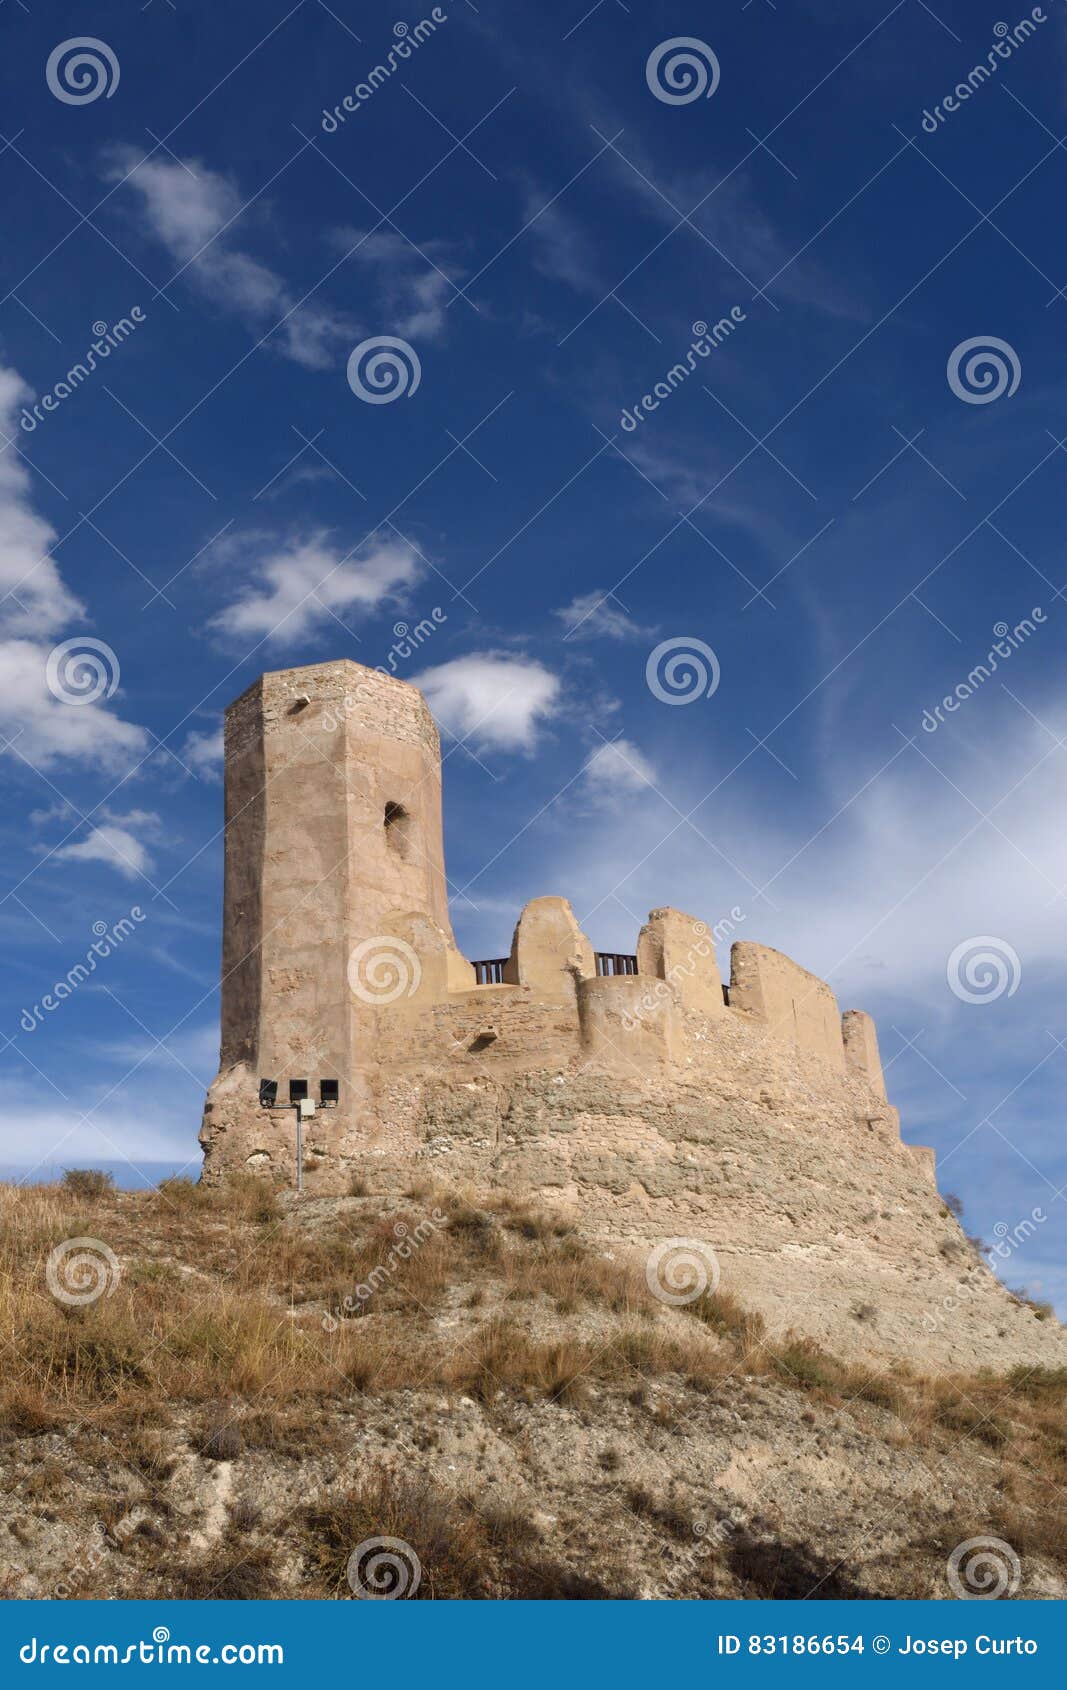 castle of ayab in calatayud, zaragoza province,